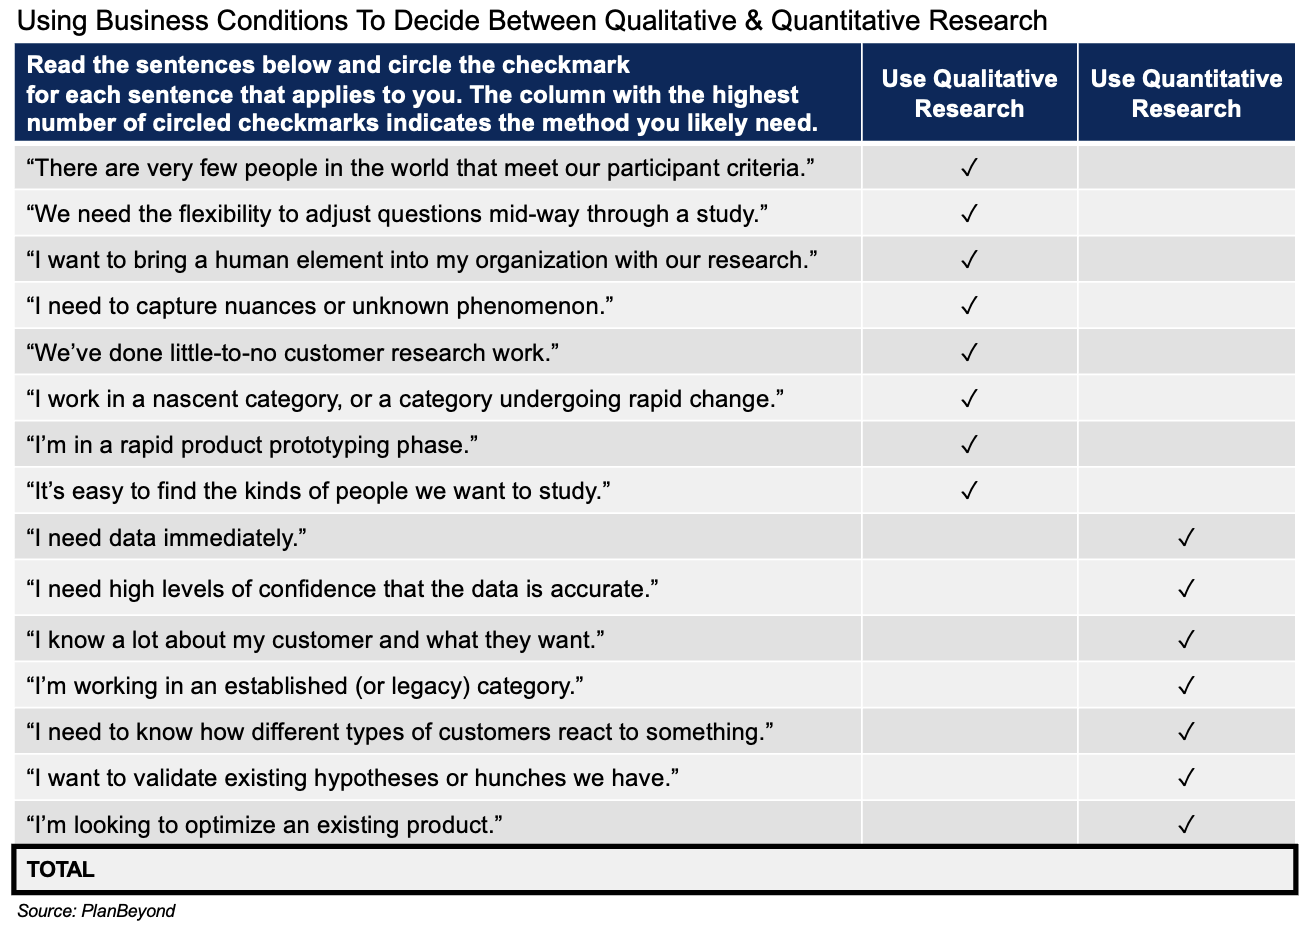 Using Business Conditions to Determine Quantitative vs Qualitative Research